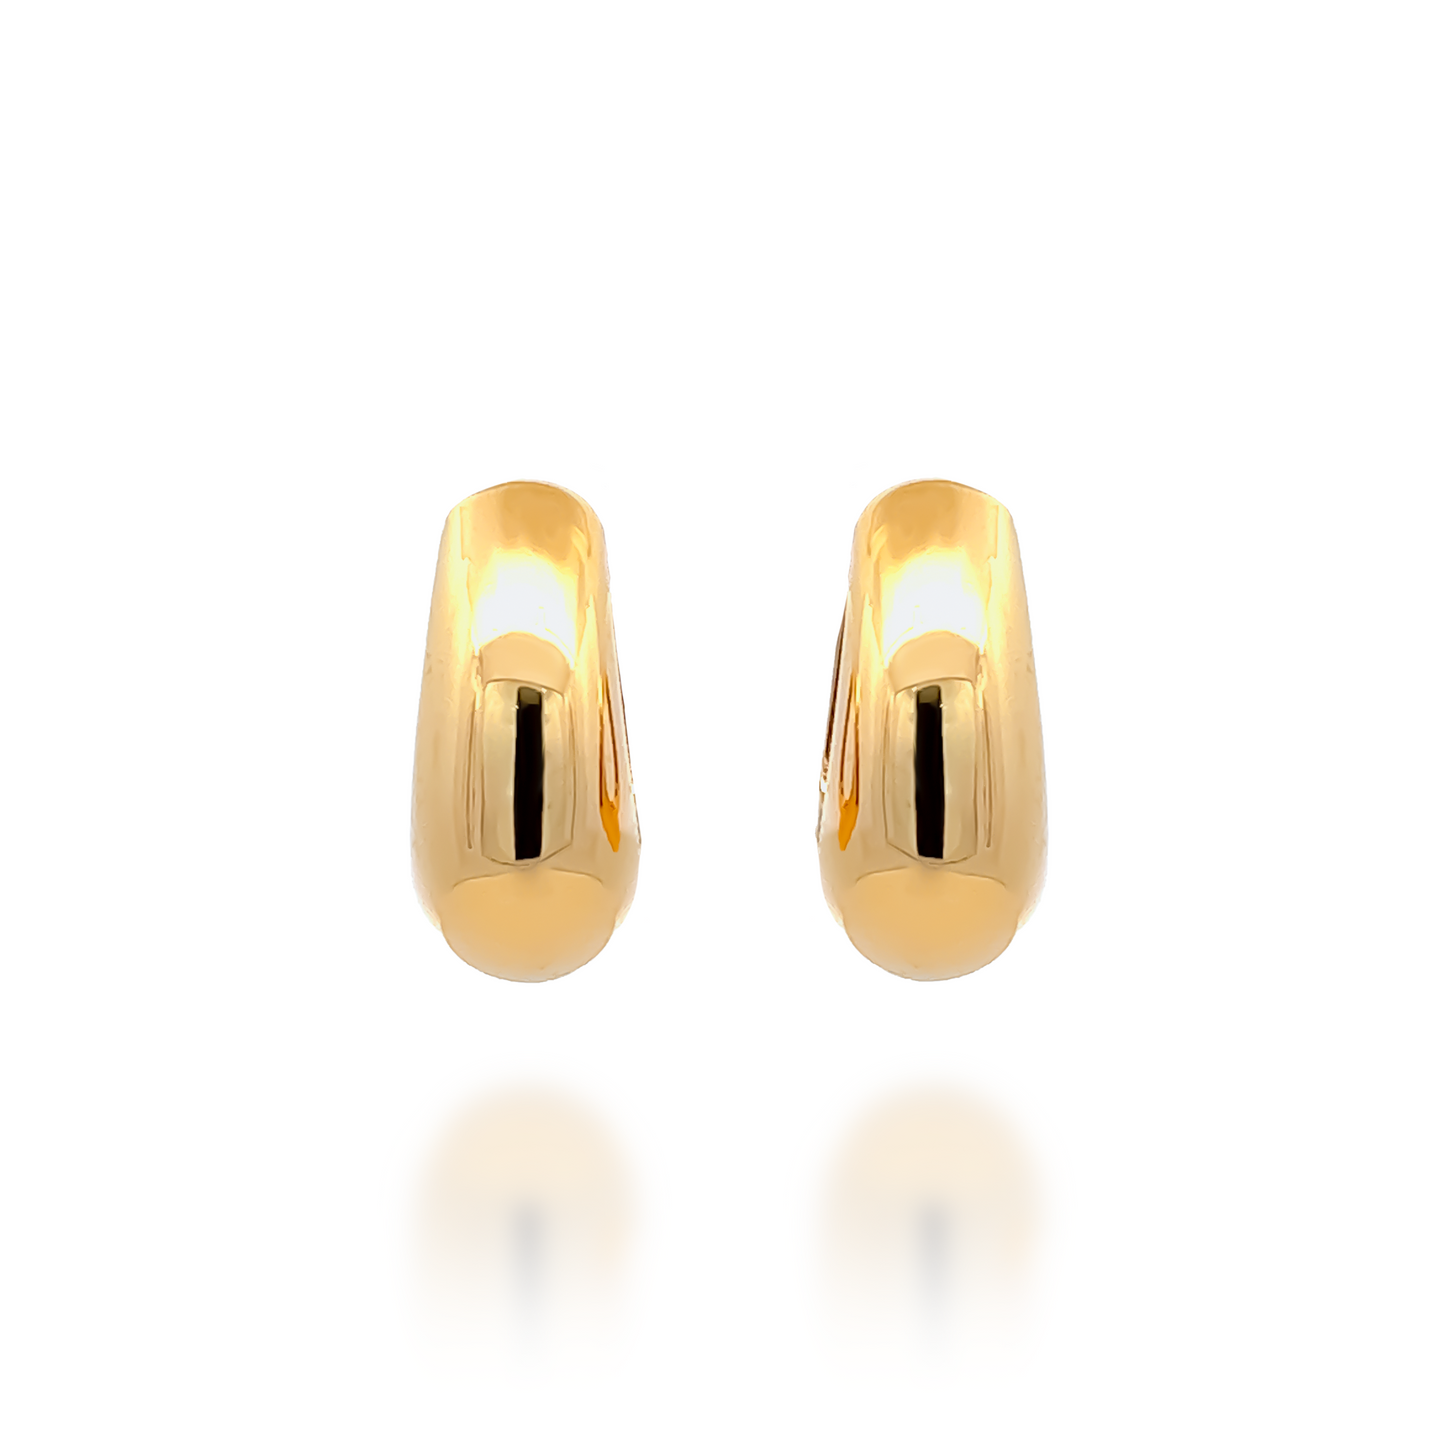 Regina Grande Earrings in Gold